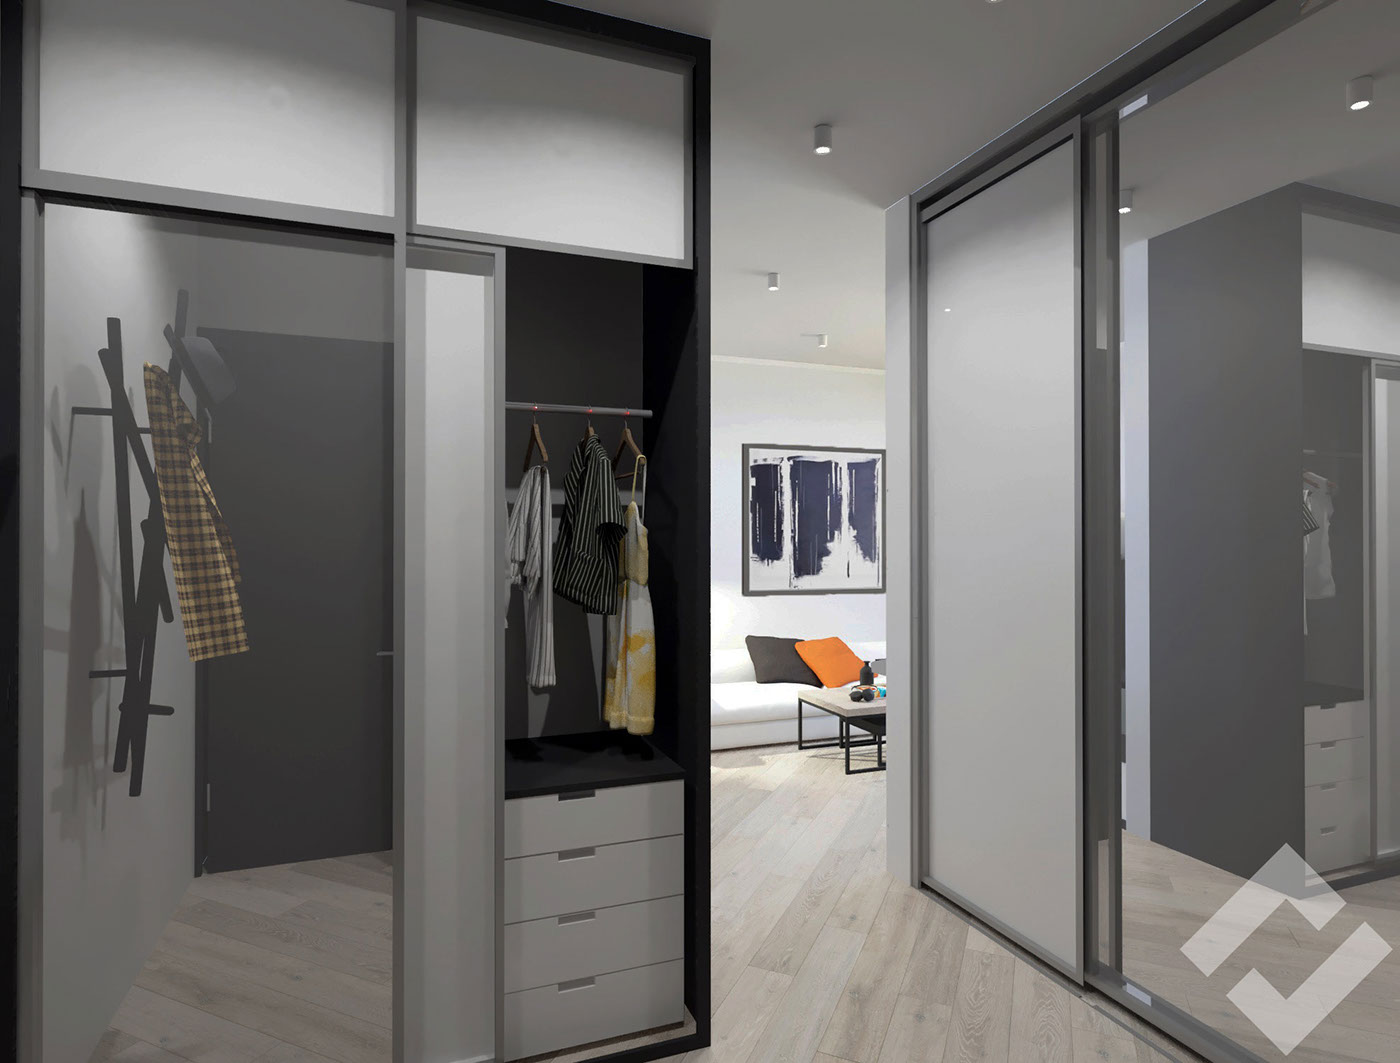 improvisation design. interior small smart apartment small apartment Creative Space How to design design interior kitchen bathroom